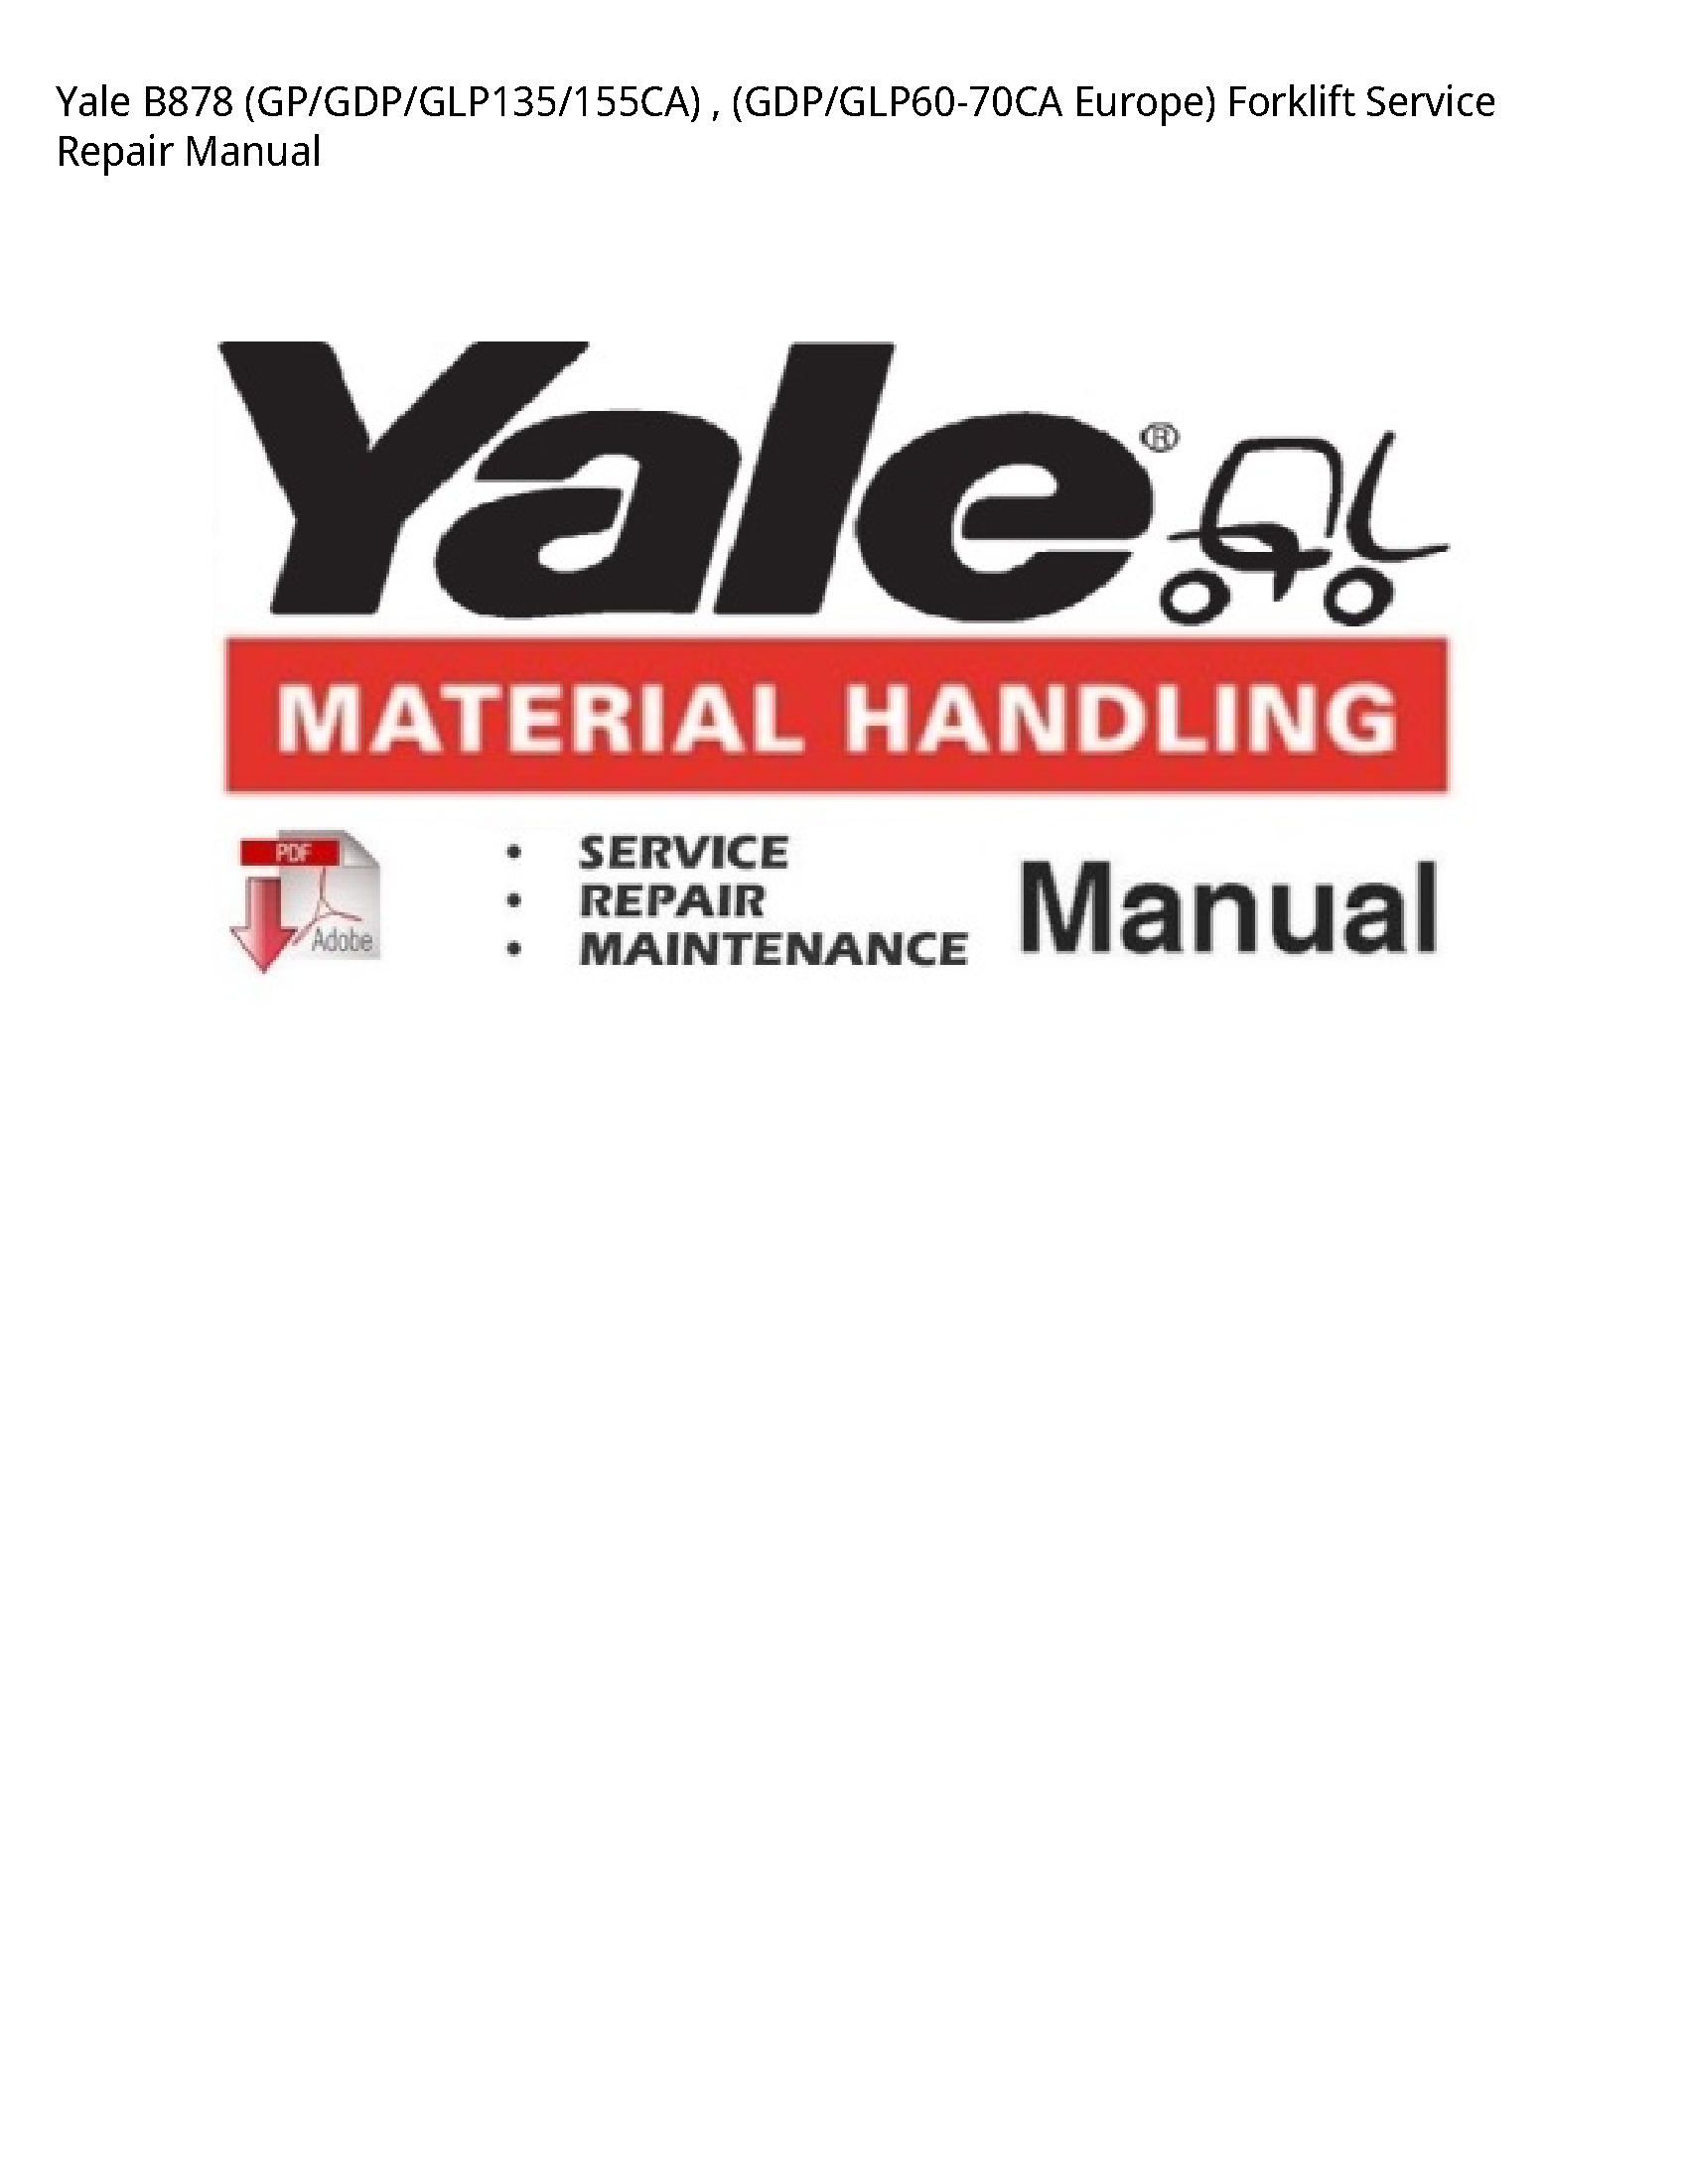 Yale B878 Europe) Forklift manual